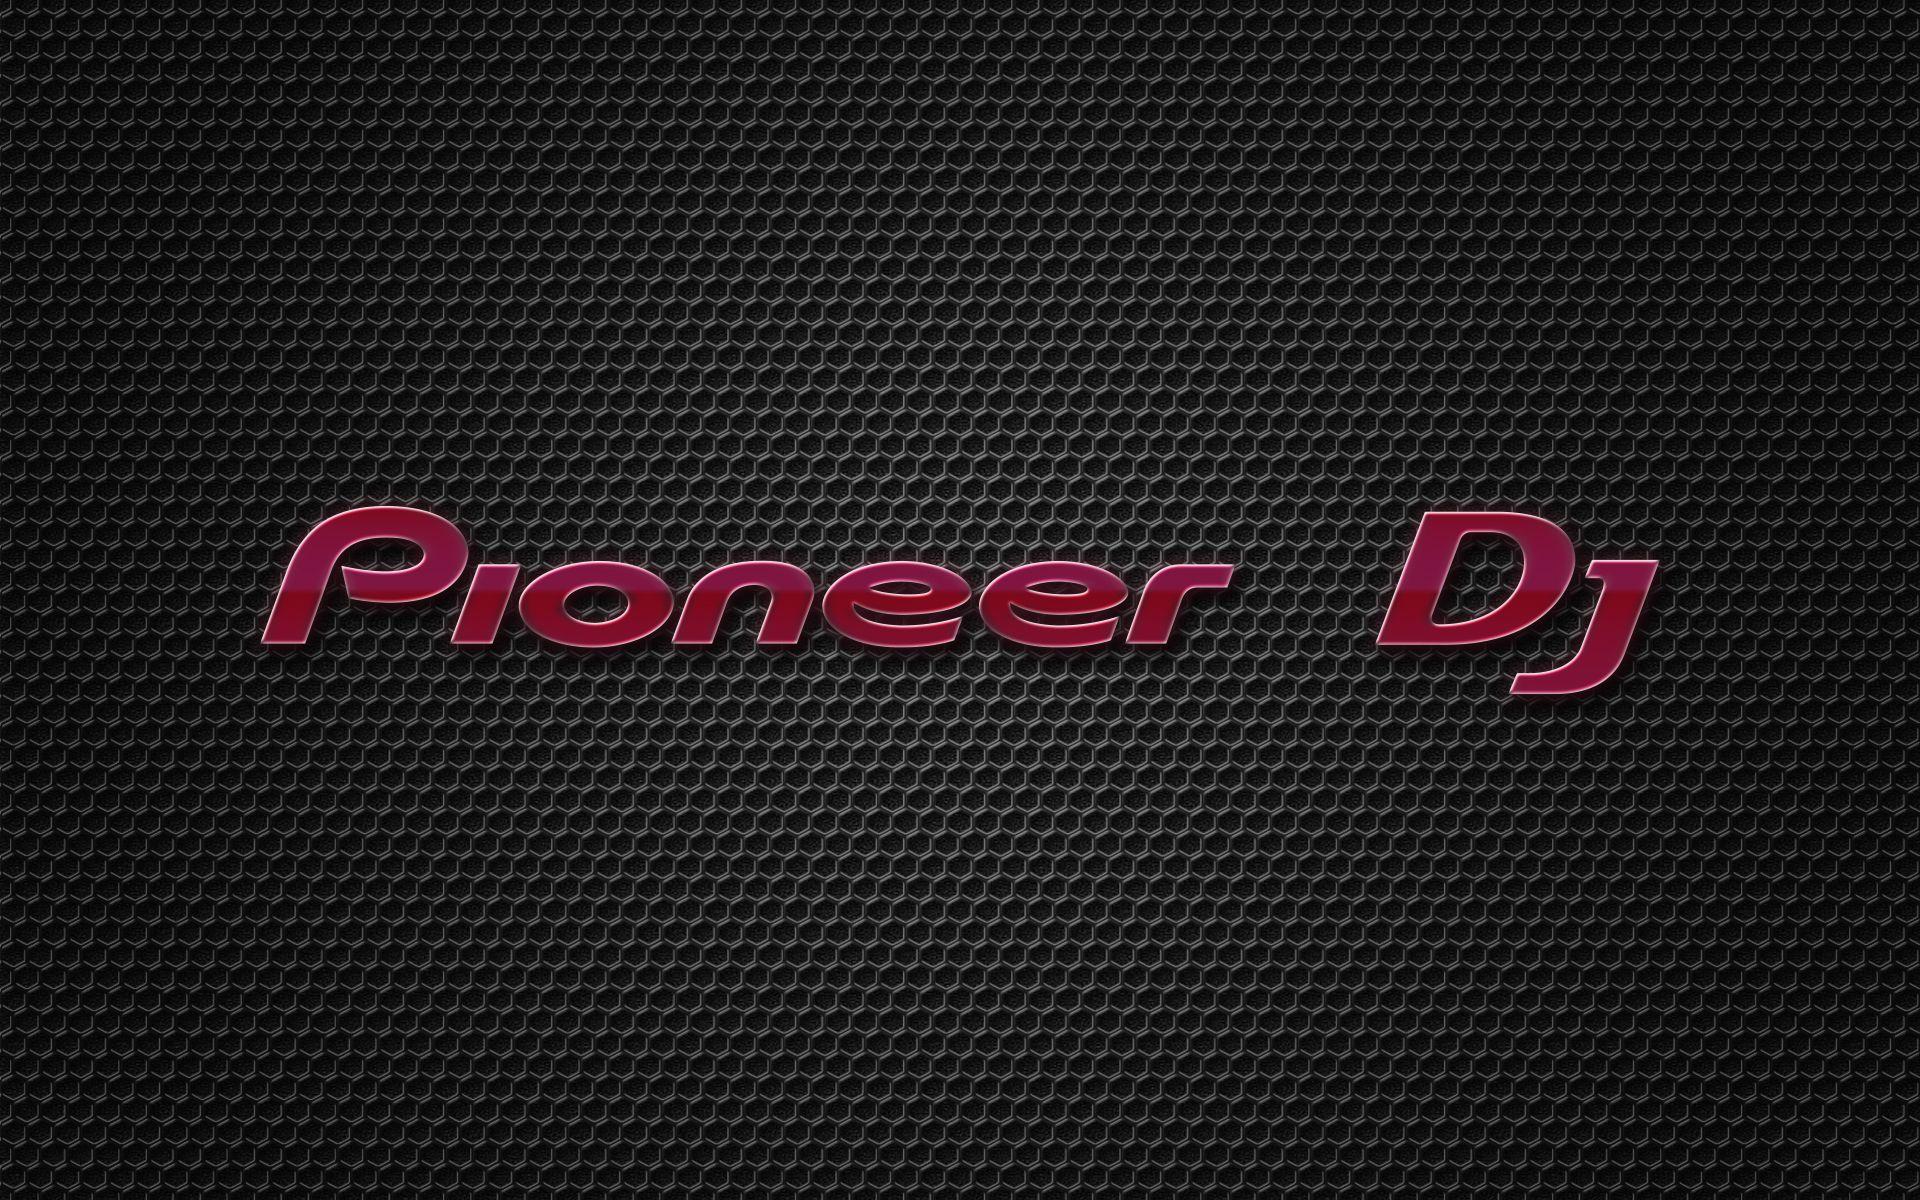 Pioneer Dj Best Logo Image. Beautiful image HD Picture & Desktop